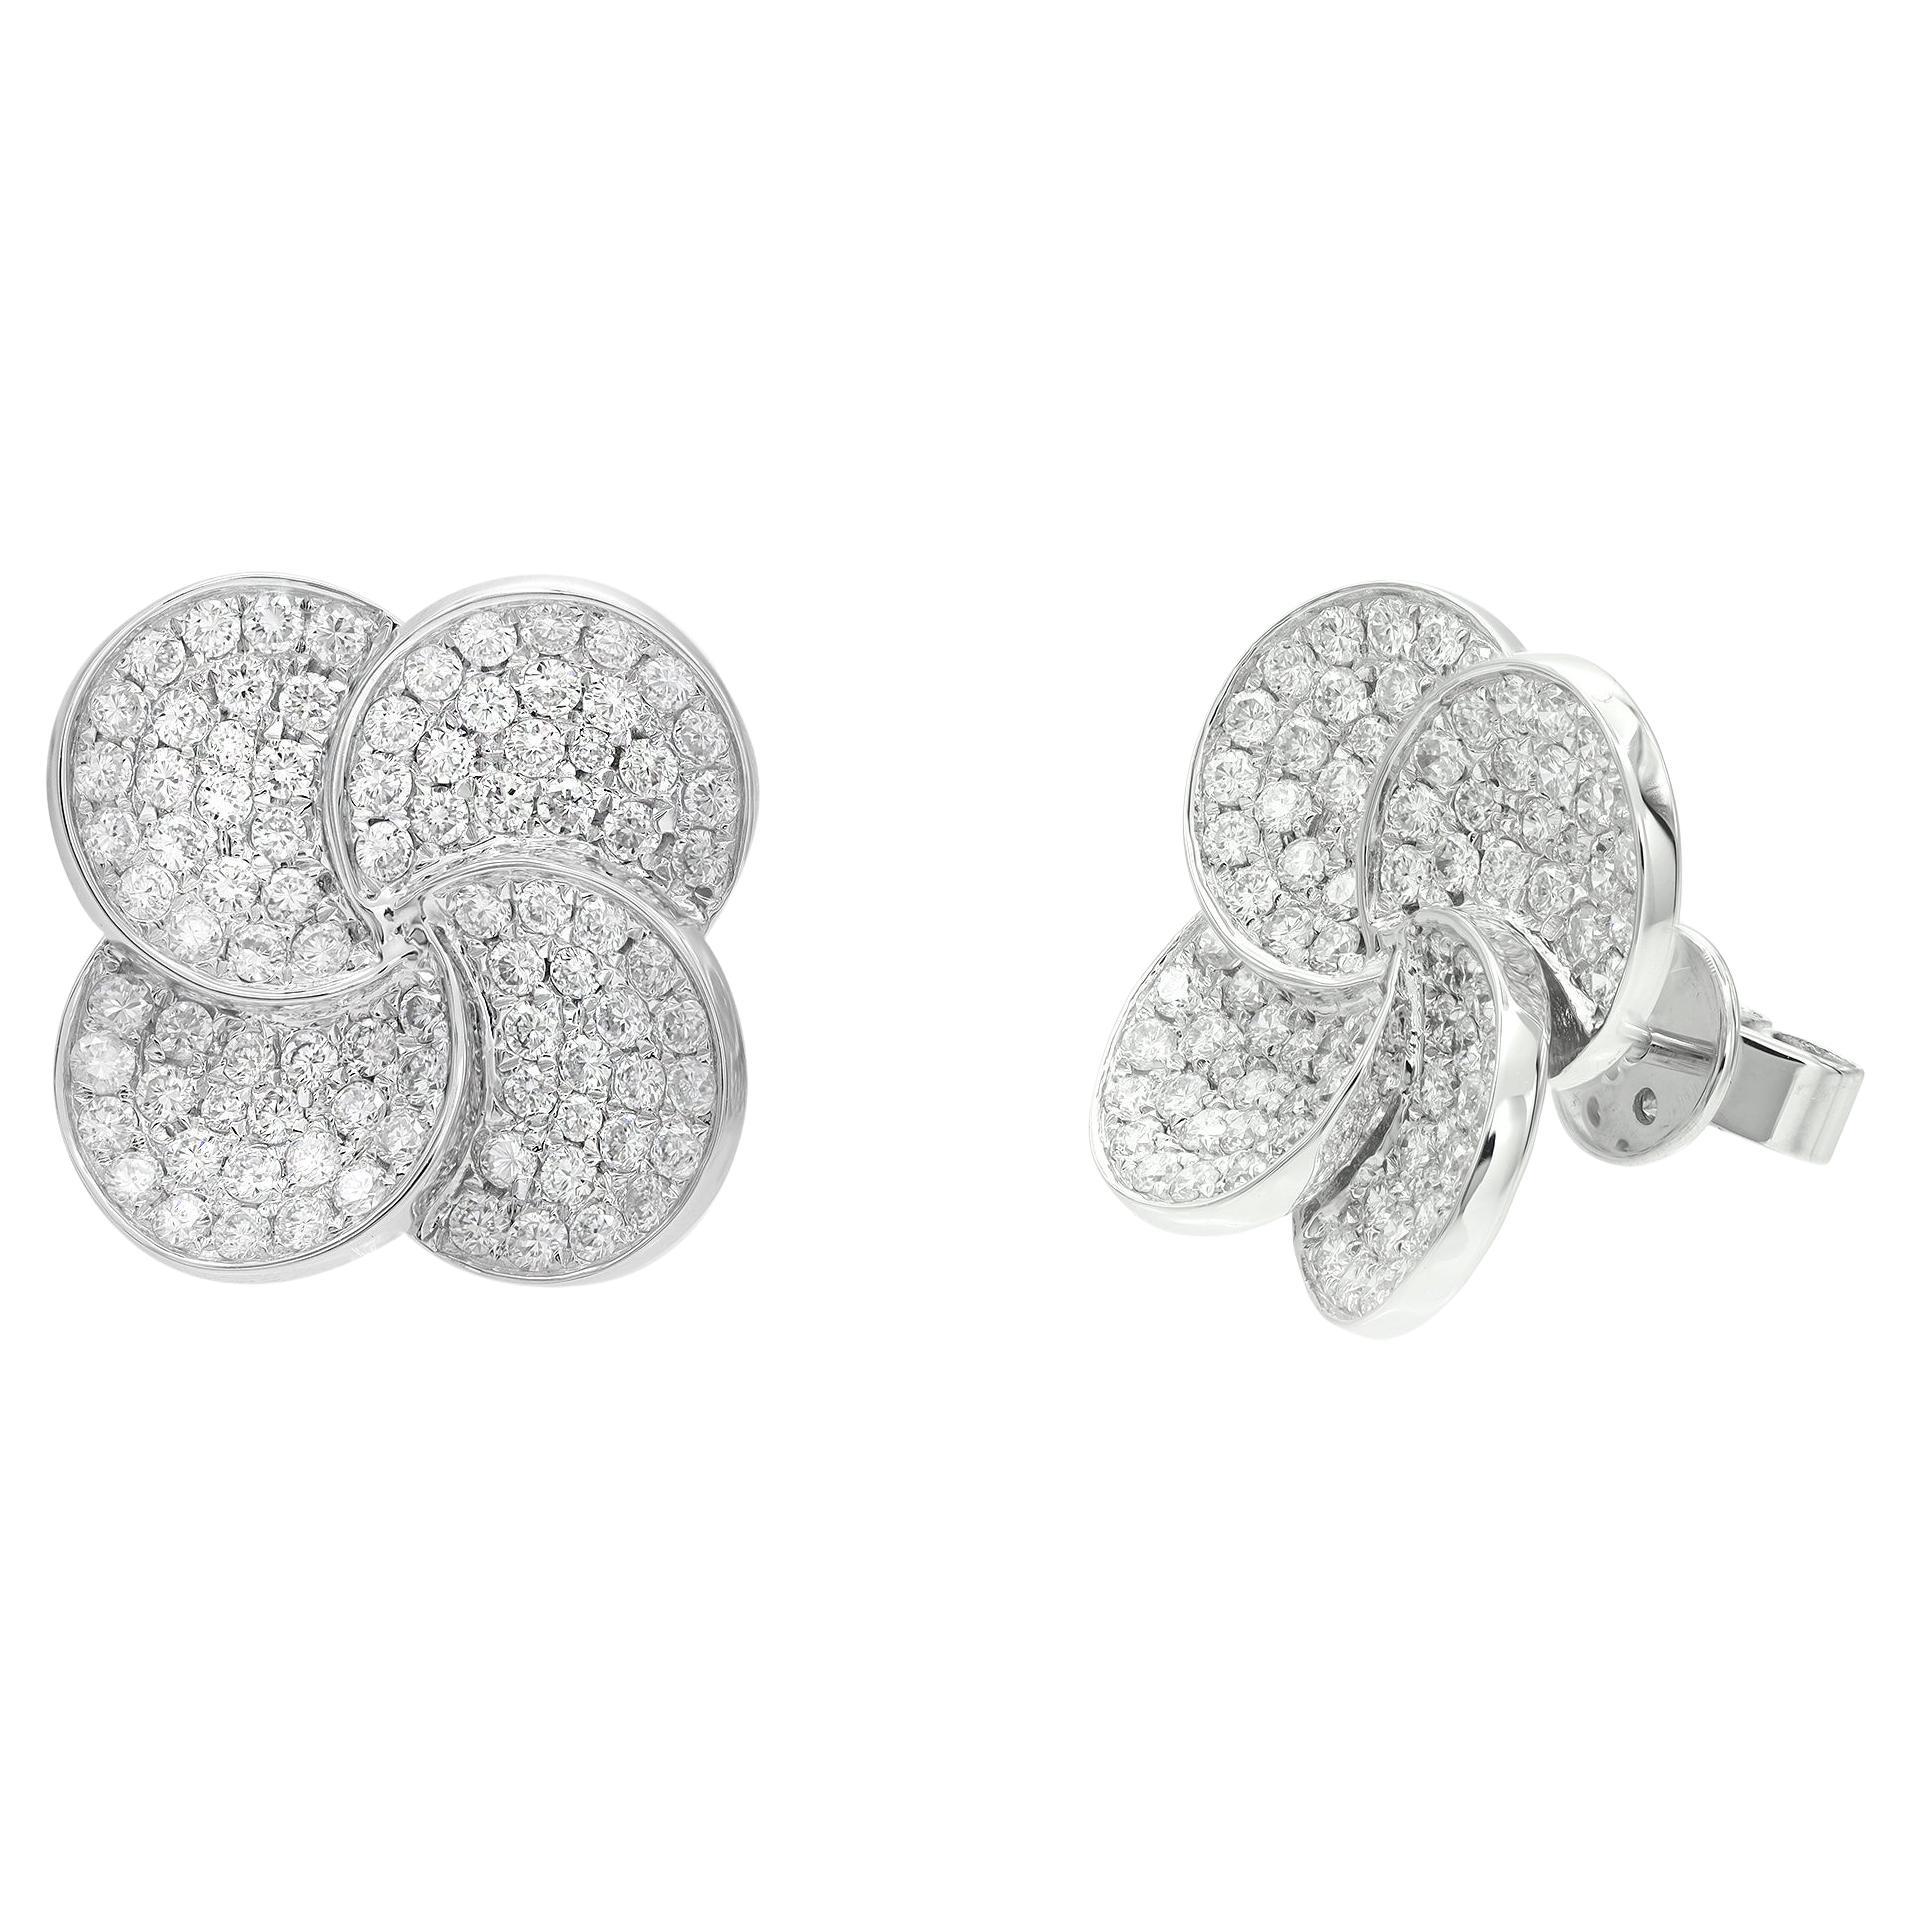 Pave Set Round Cut Diamond Flower Stud Earring 18K White Gold 1.44Cttw